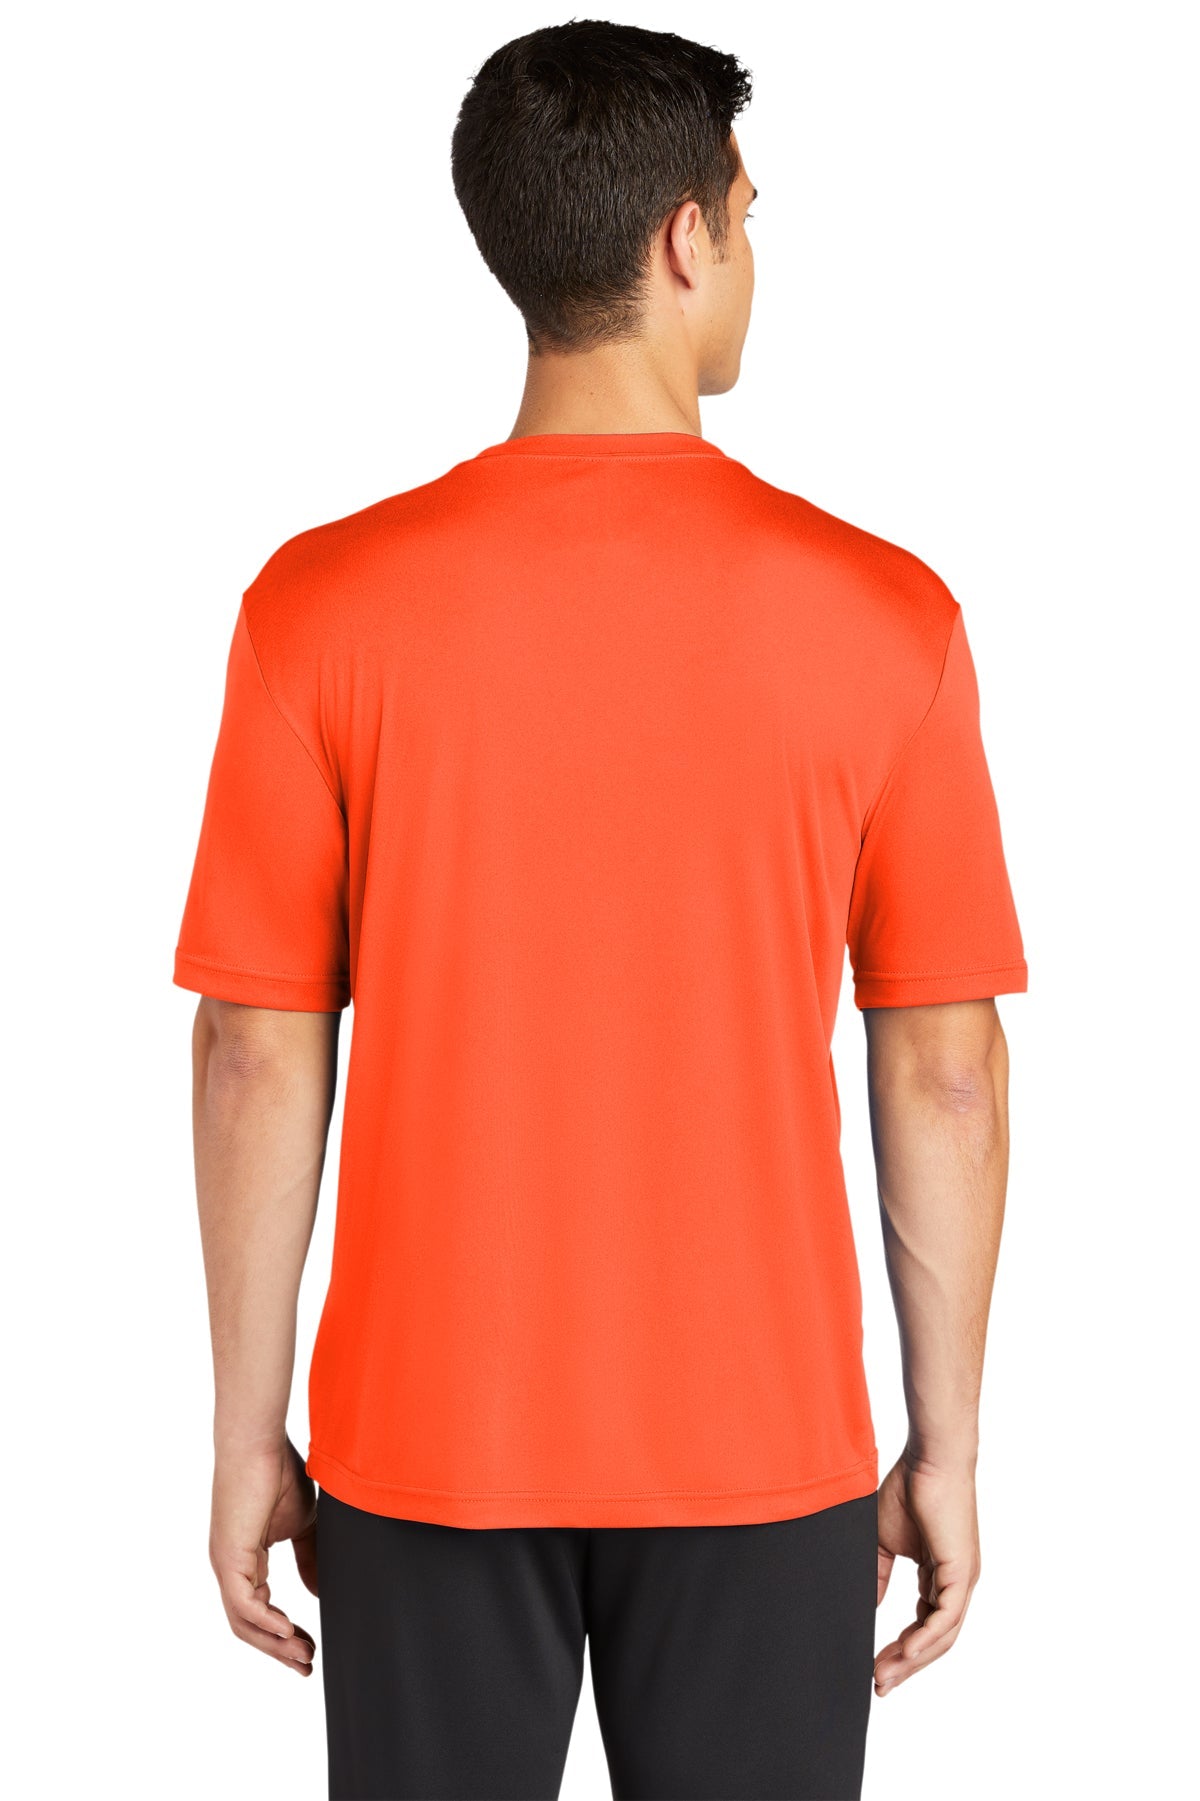 Sport-Tek Tall PosiCharge Customized Competitor Tee's, Neon Orange